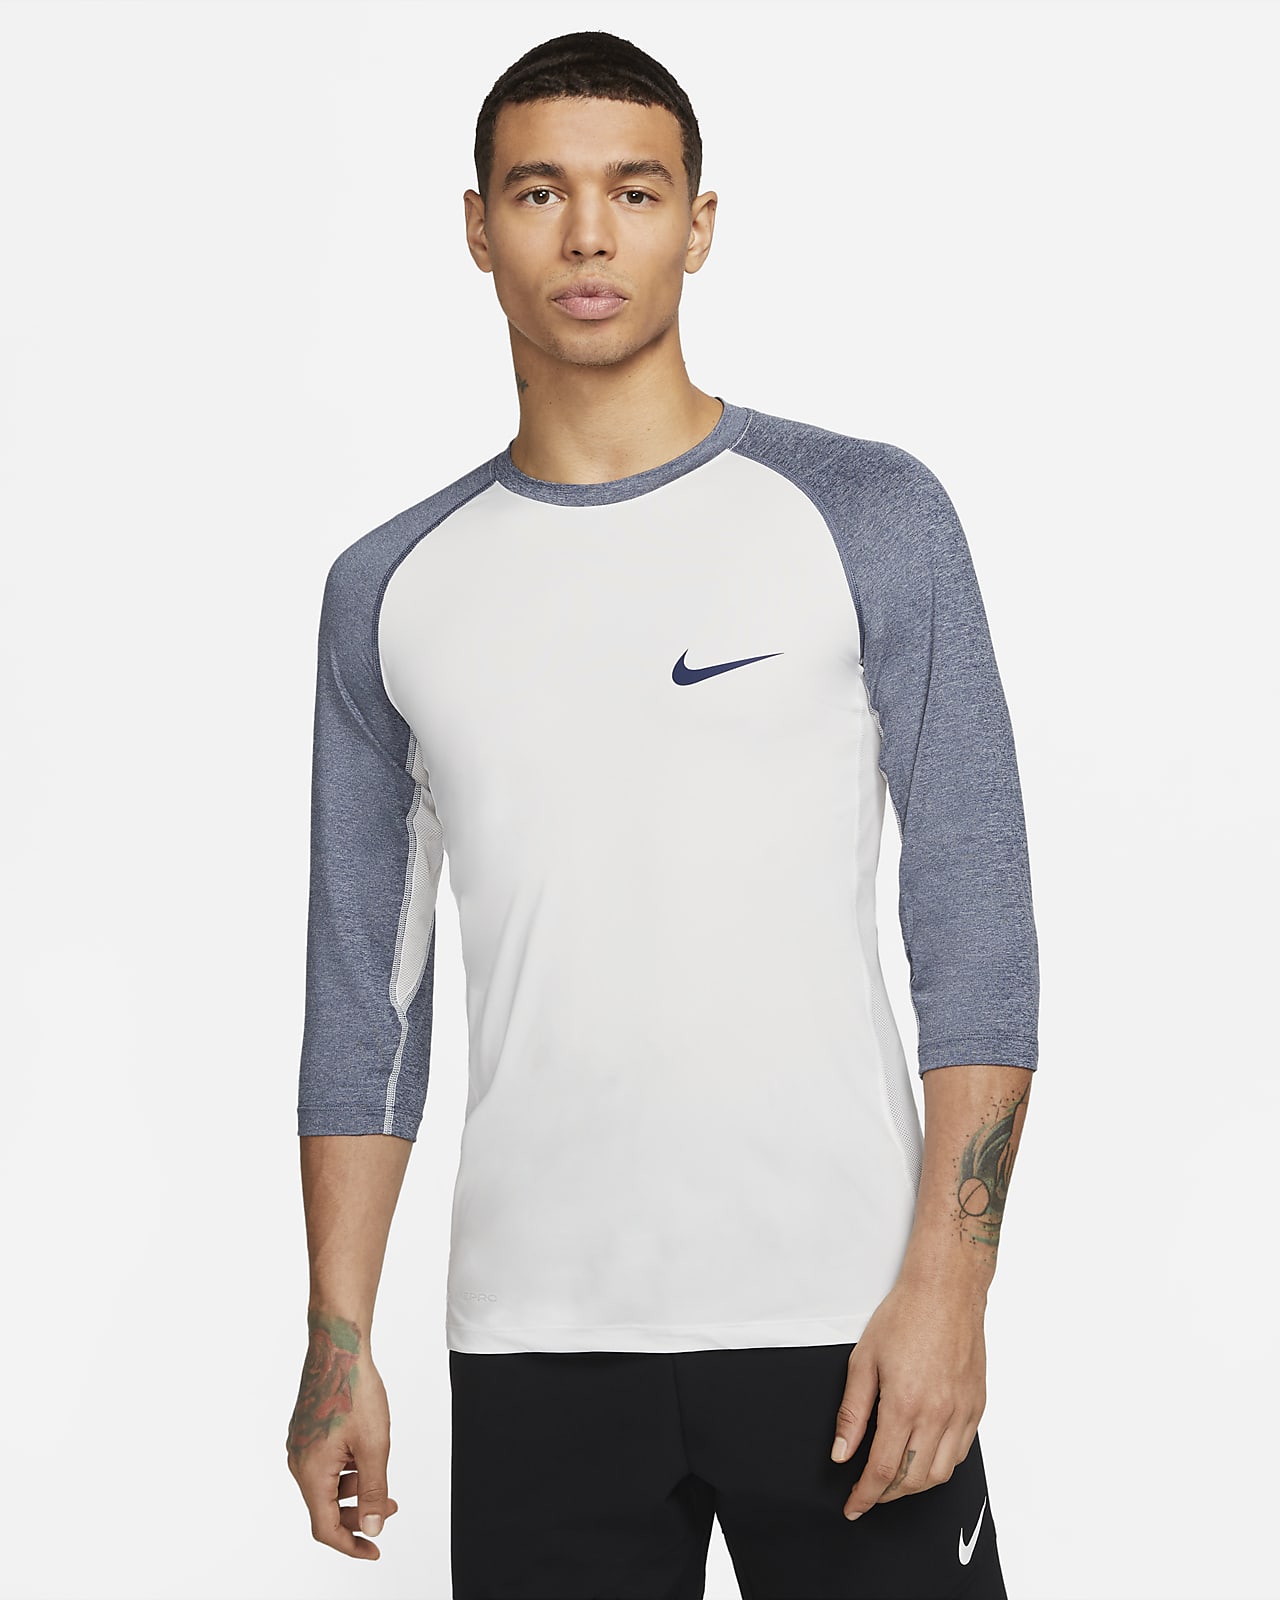 Nike Men's 3/4-Length Sleeve Baseball Top. Nike.com